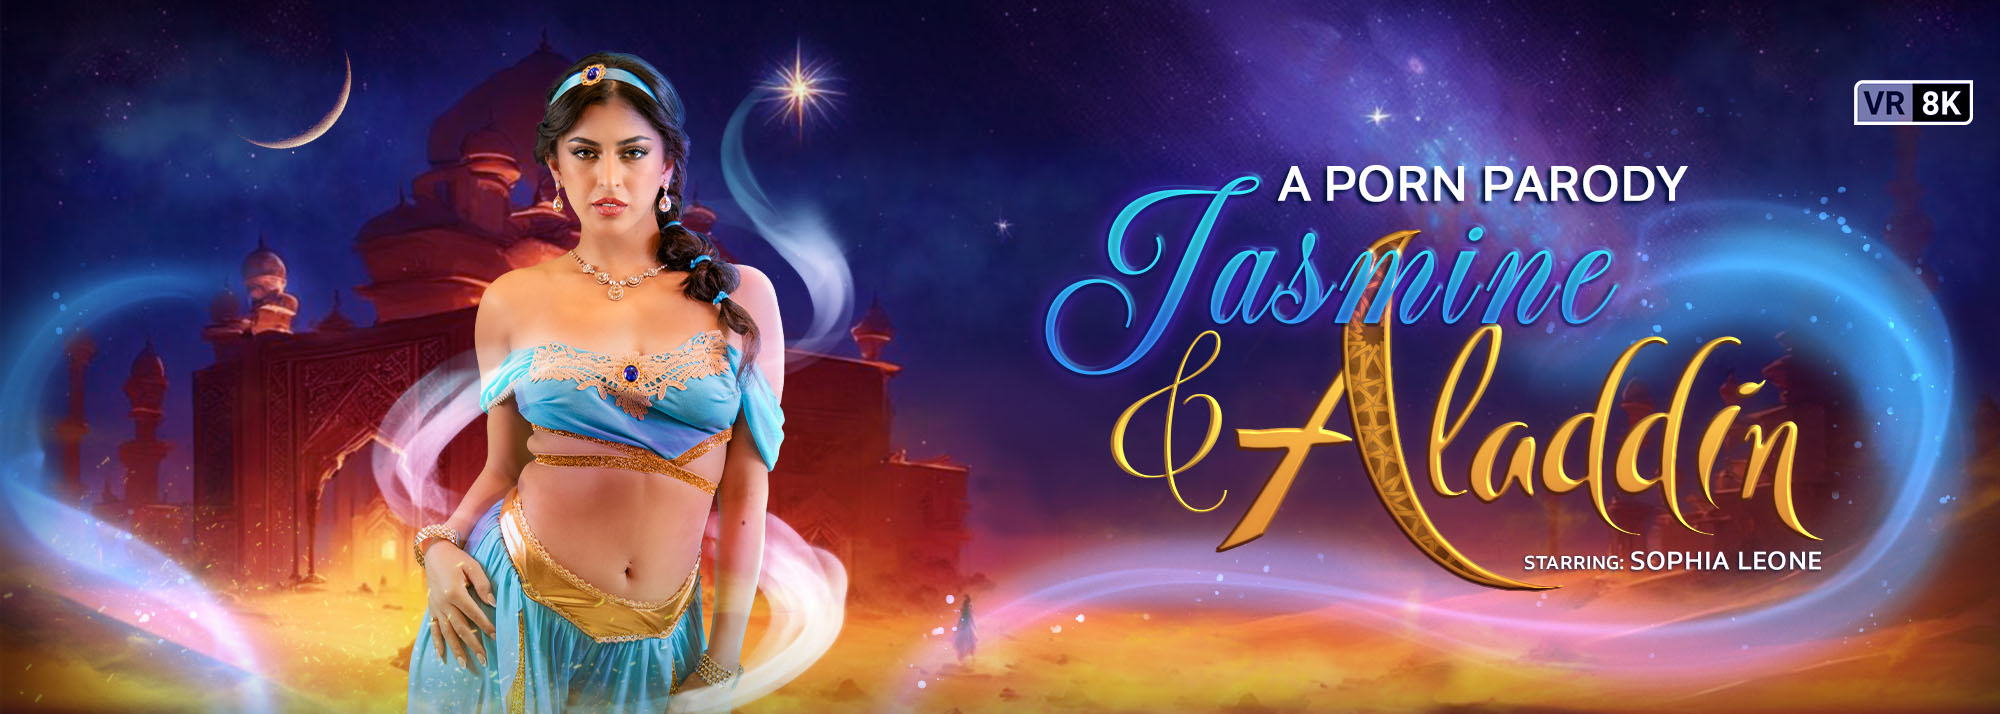 Jasmine & Aladdin (A Porn Parody) - VR Video, Starring: Sophia Leone